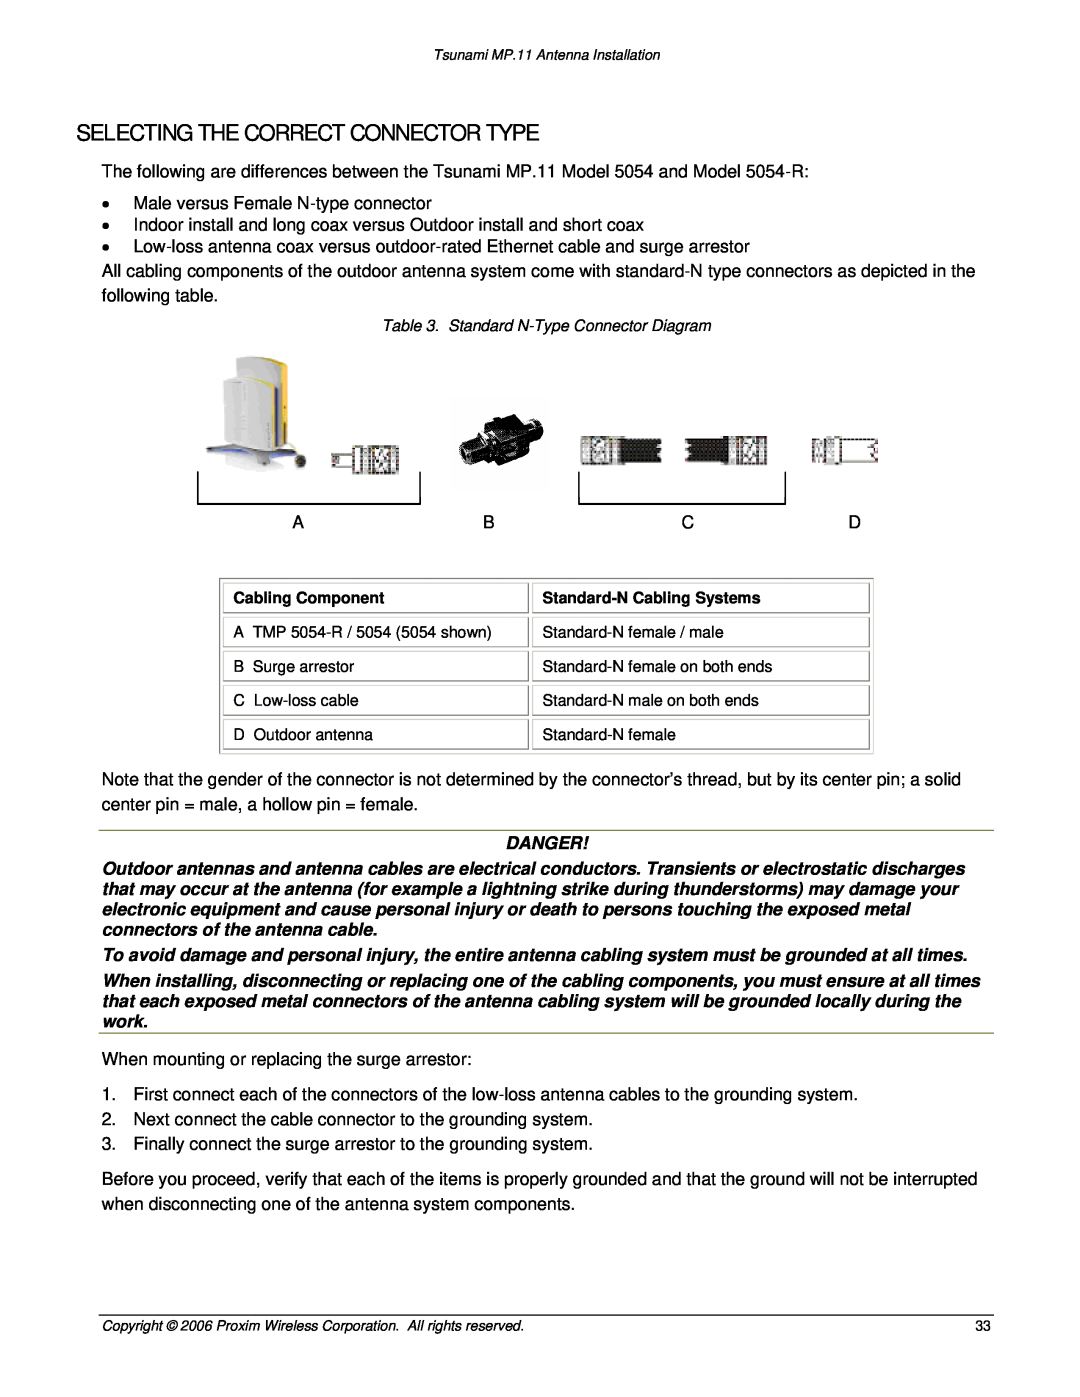 Proxim Tsunami MP.11 manual Selecting The Correct Connector Type 